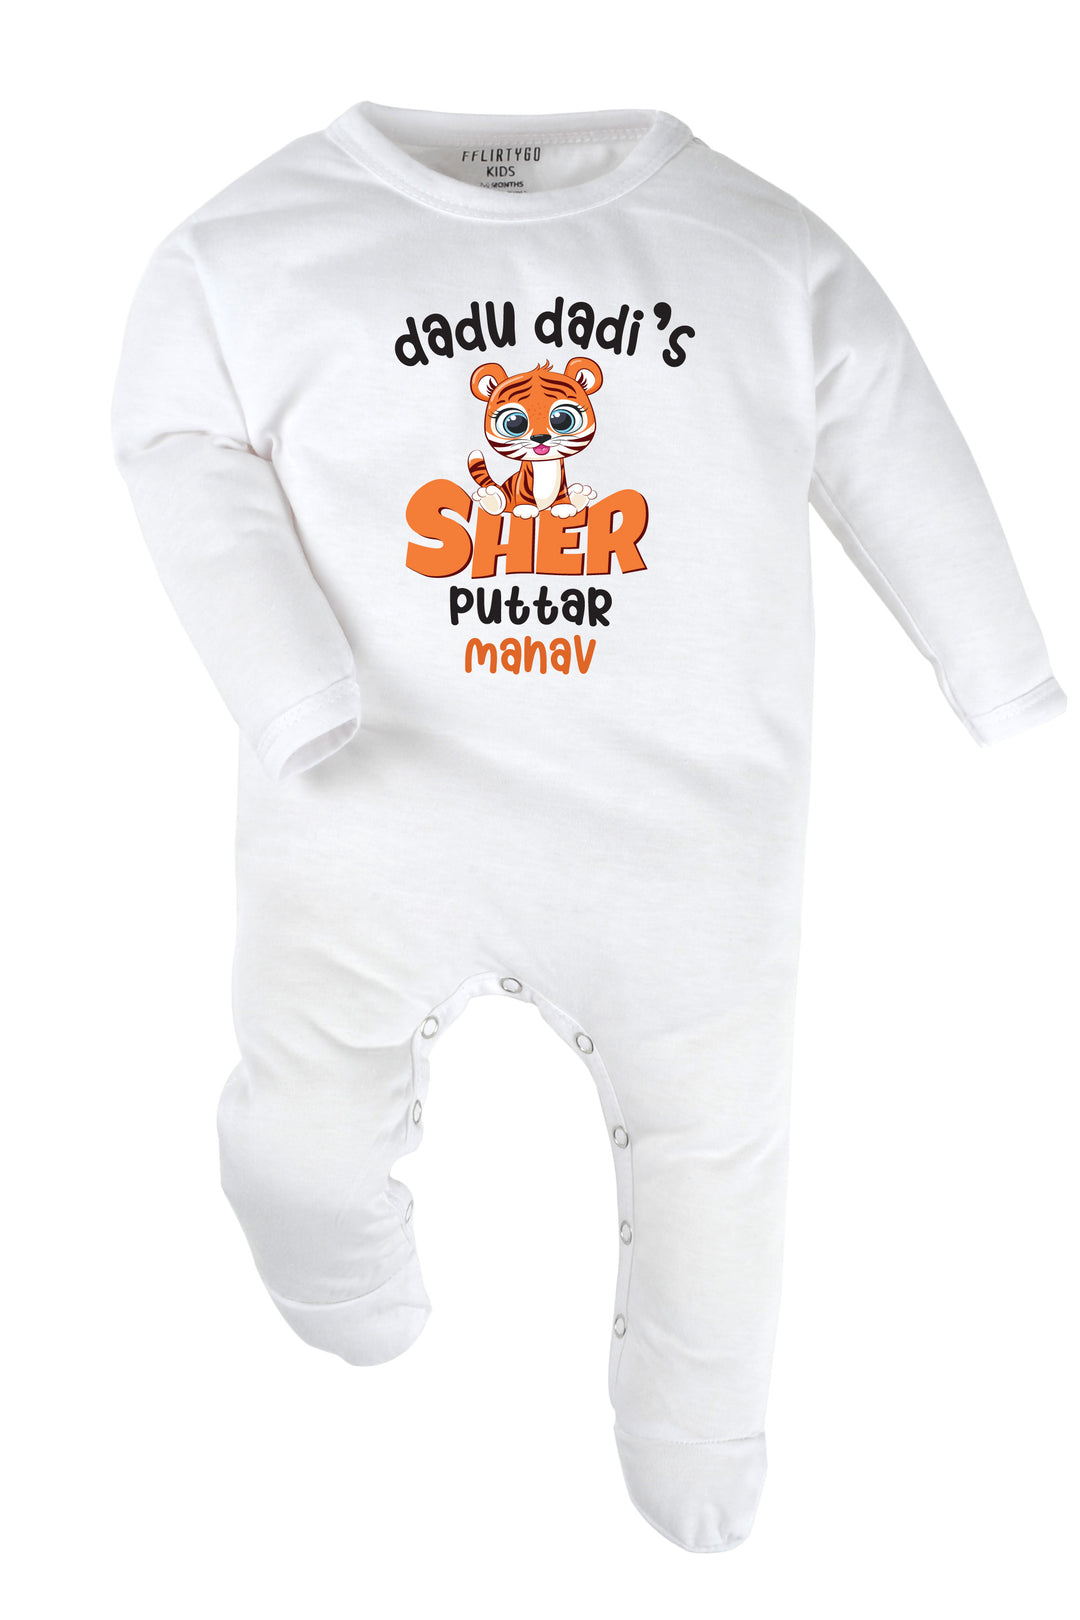 Dadu Dadi's Sher Puttar Baby Romper | Onesies w/ Custom Name